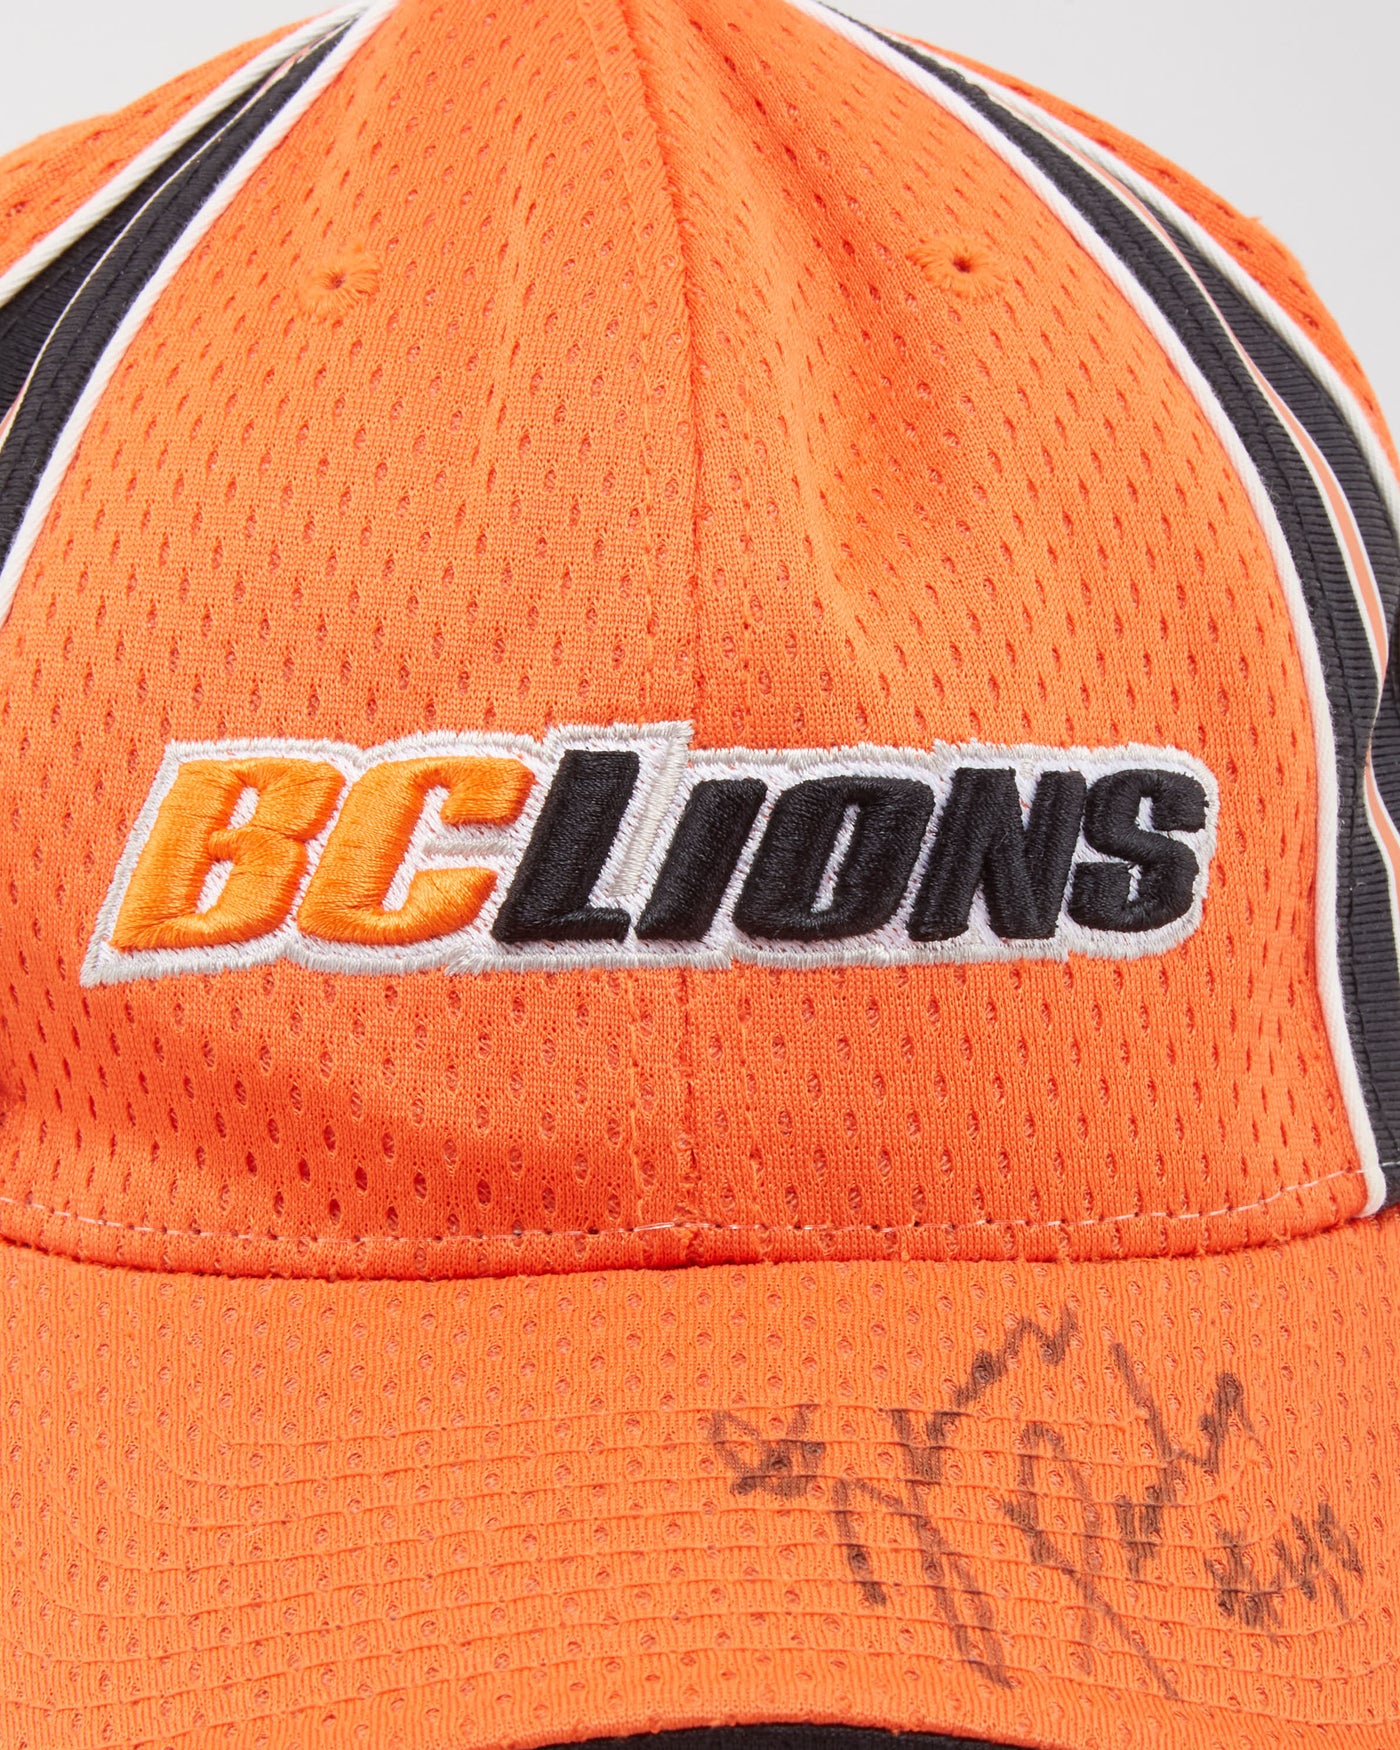 BC Lions CFL Signed Reebok Orange Flexi-Fit Hat